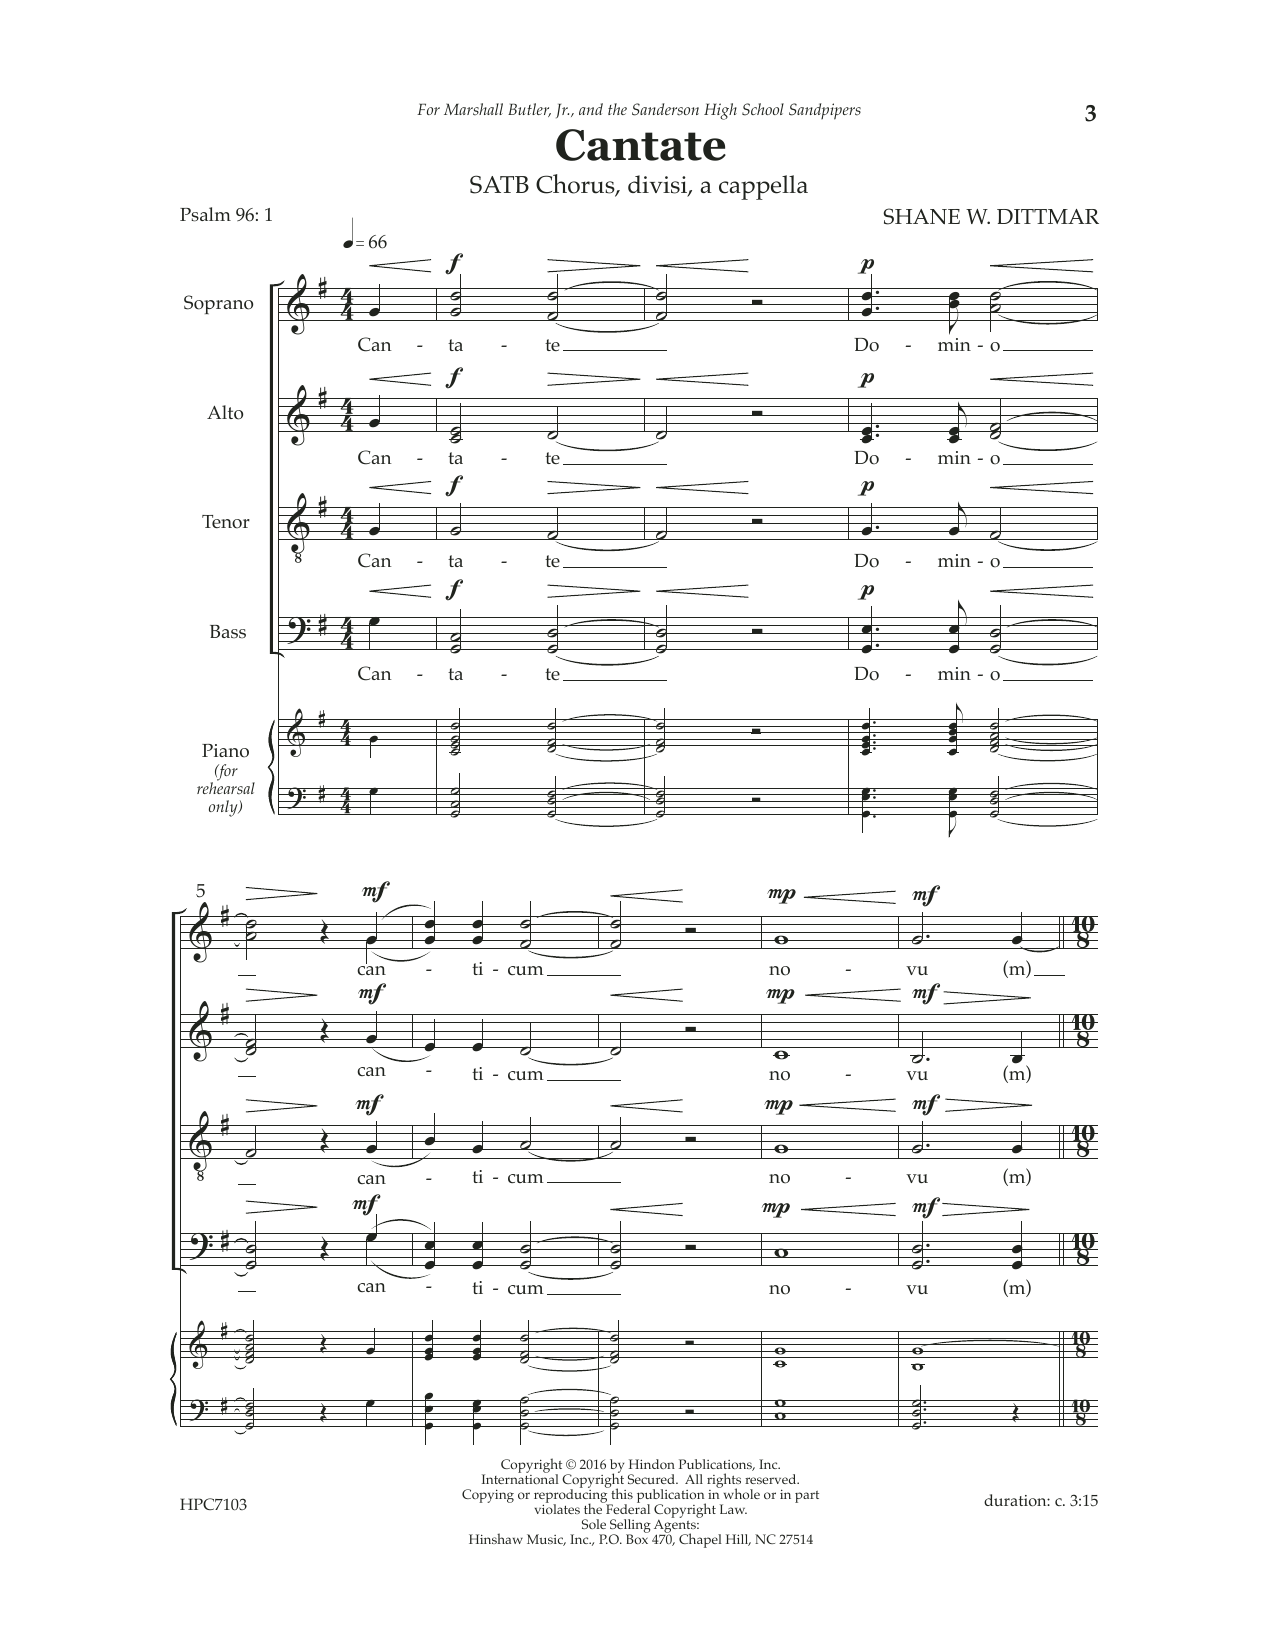 Shane Dittmar Cantate Sheet Music Notes & Chords for SATB Choir - Download or Print PDF